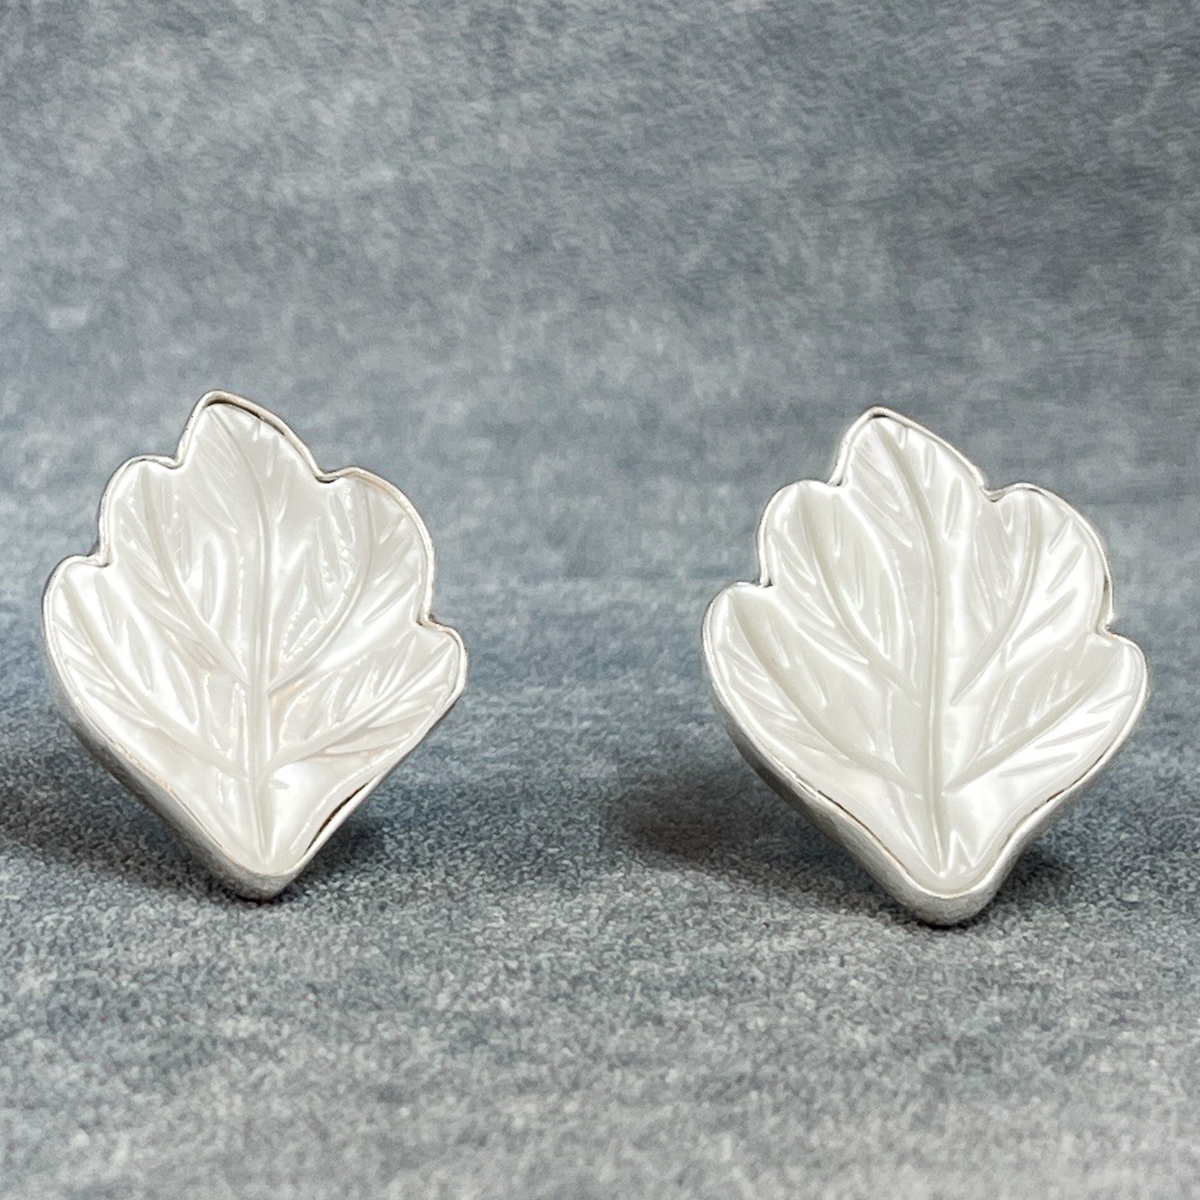 Pearla - Carved Mother of Pearl Leaf Silver Earrings - Stud